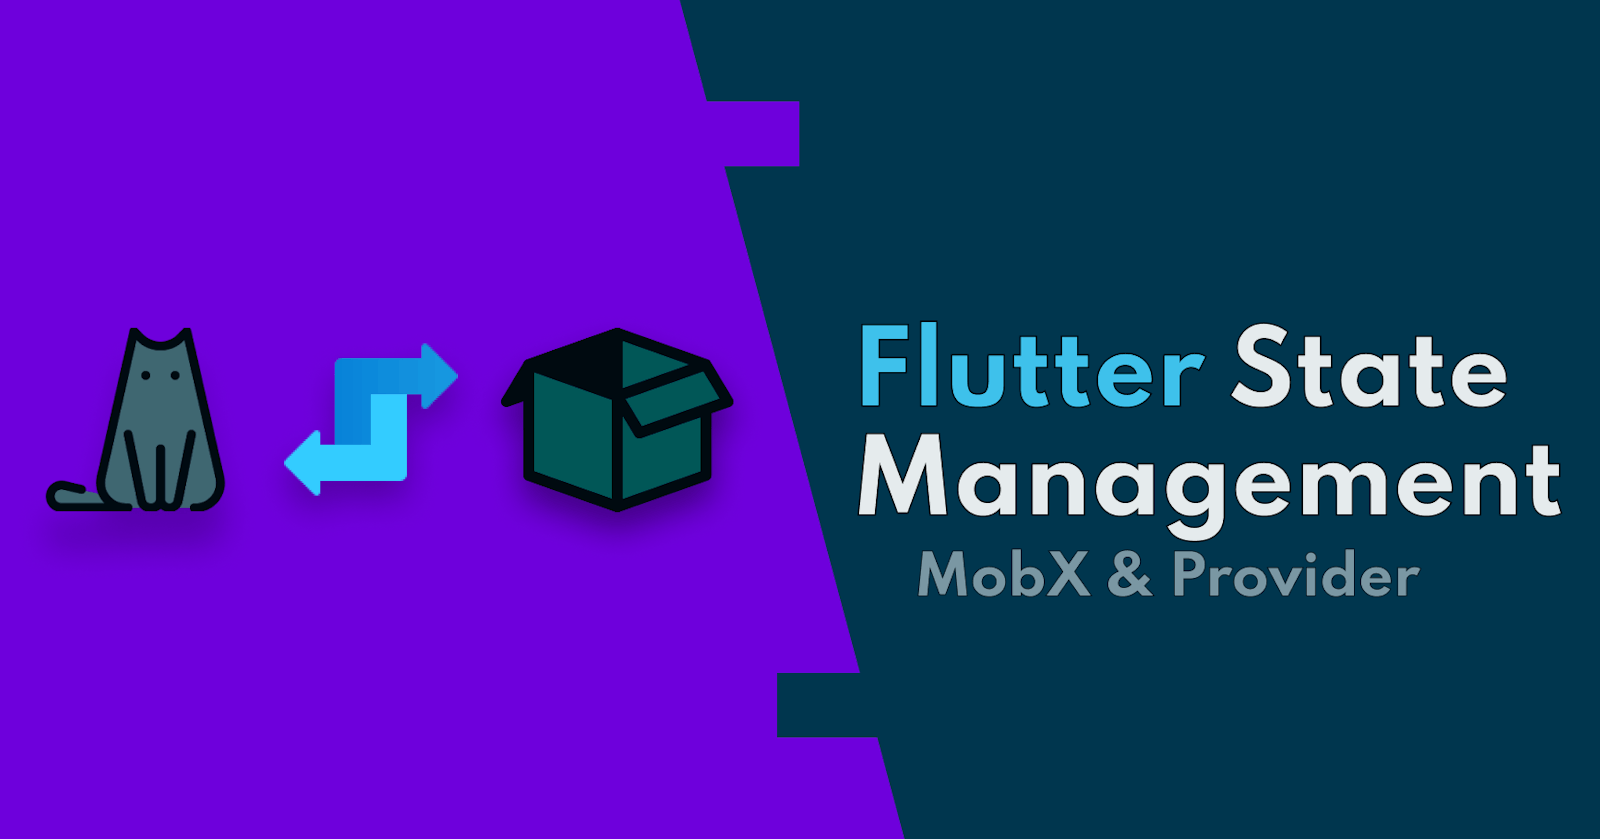 MobX: Flutter State Management like a Boss